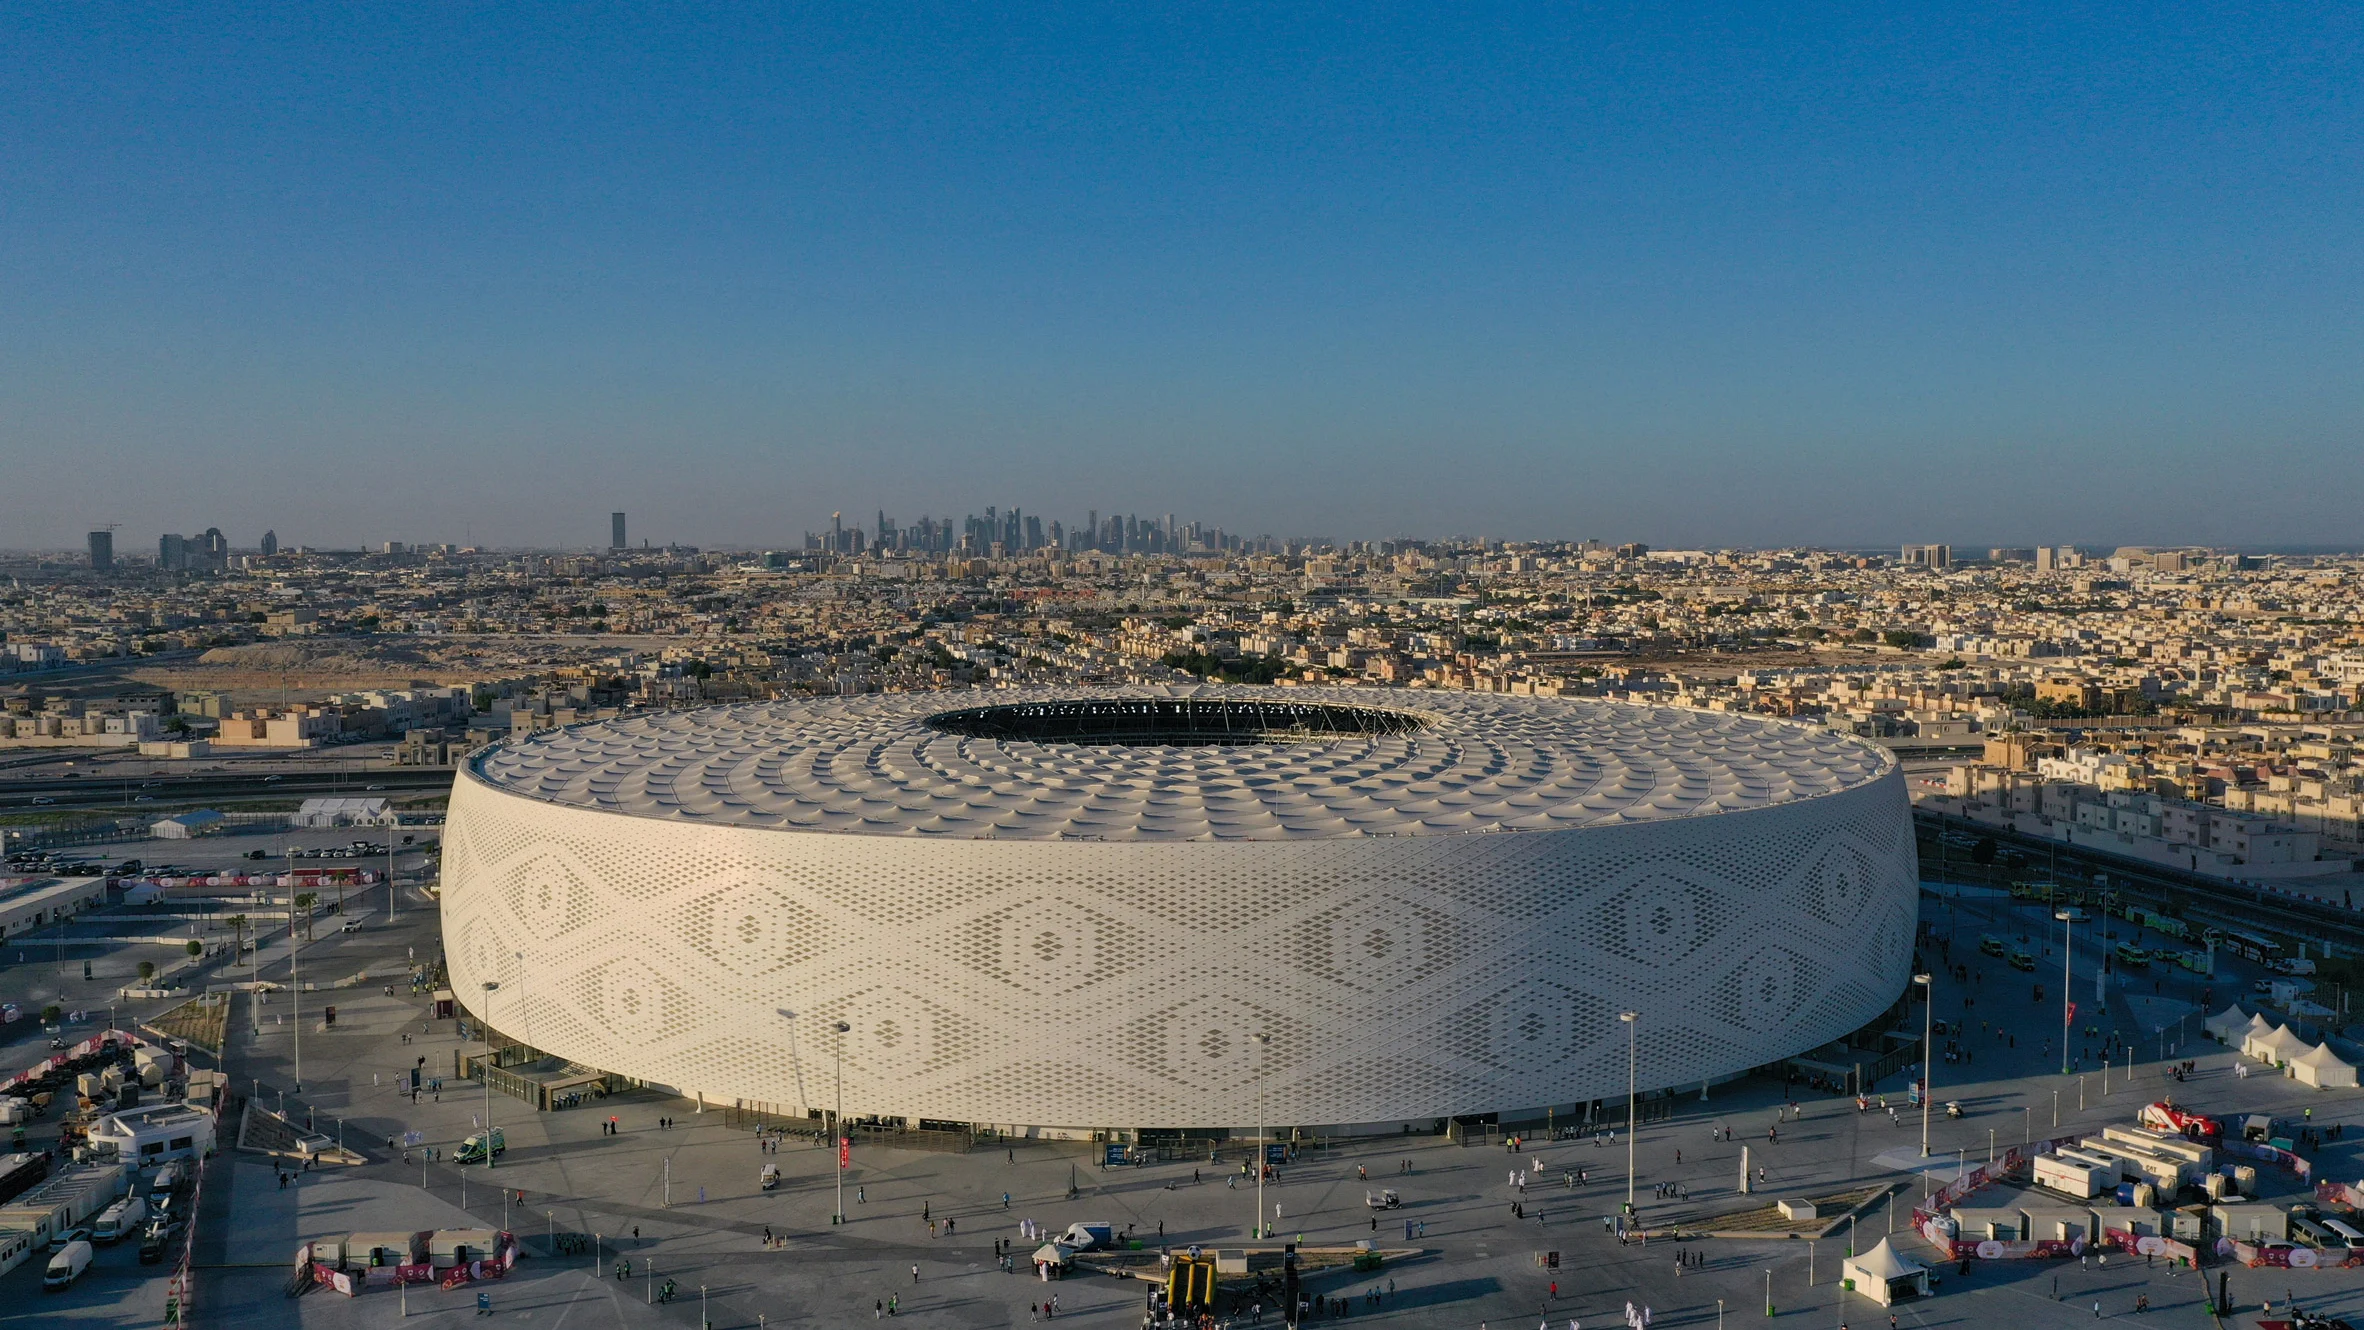 Al-Tumama Stadium in Qatar